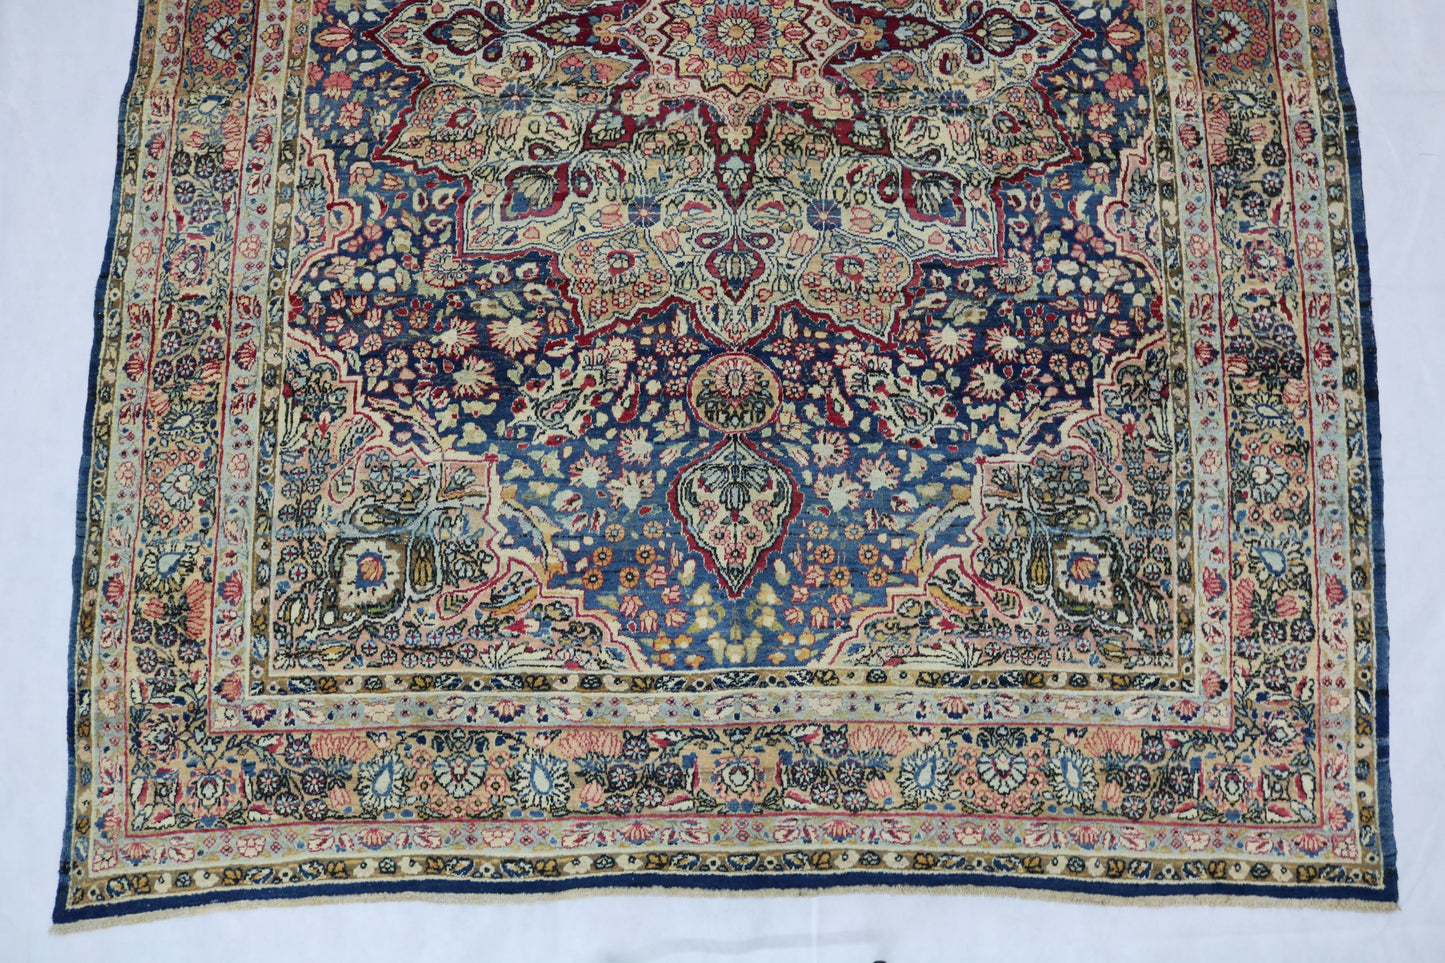 Antique Persian Lavar Kerman carpet